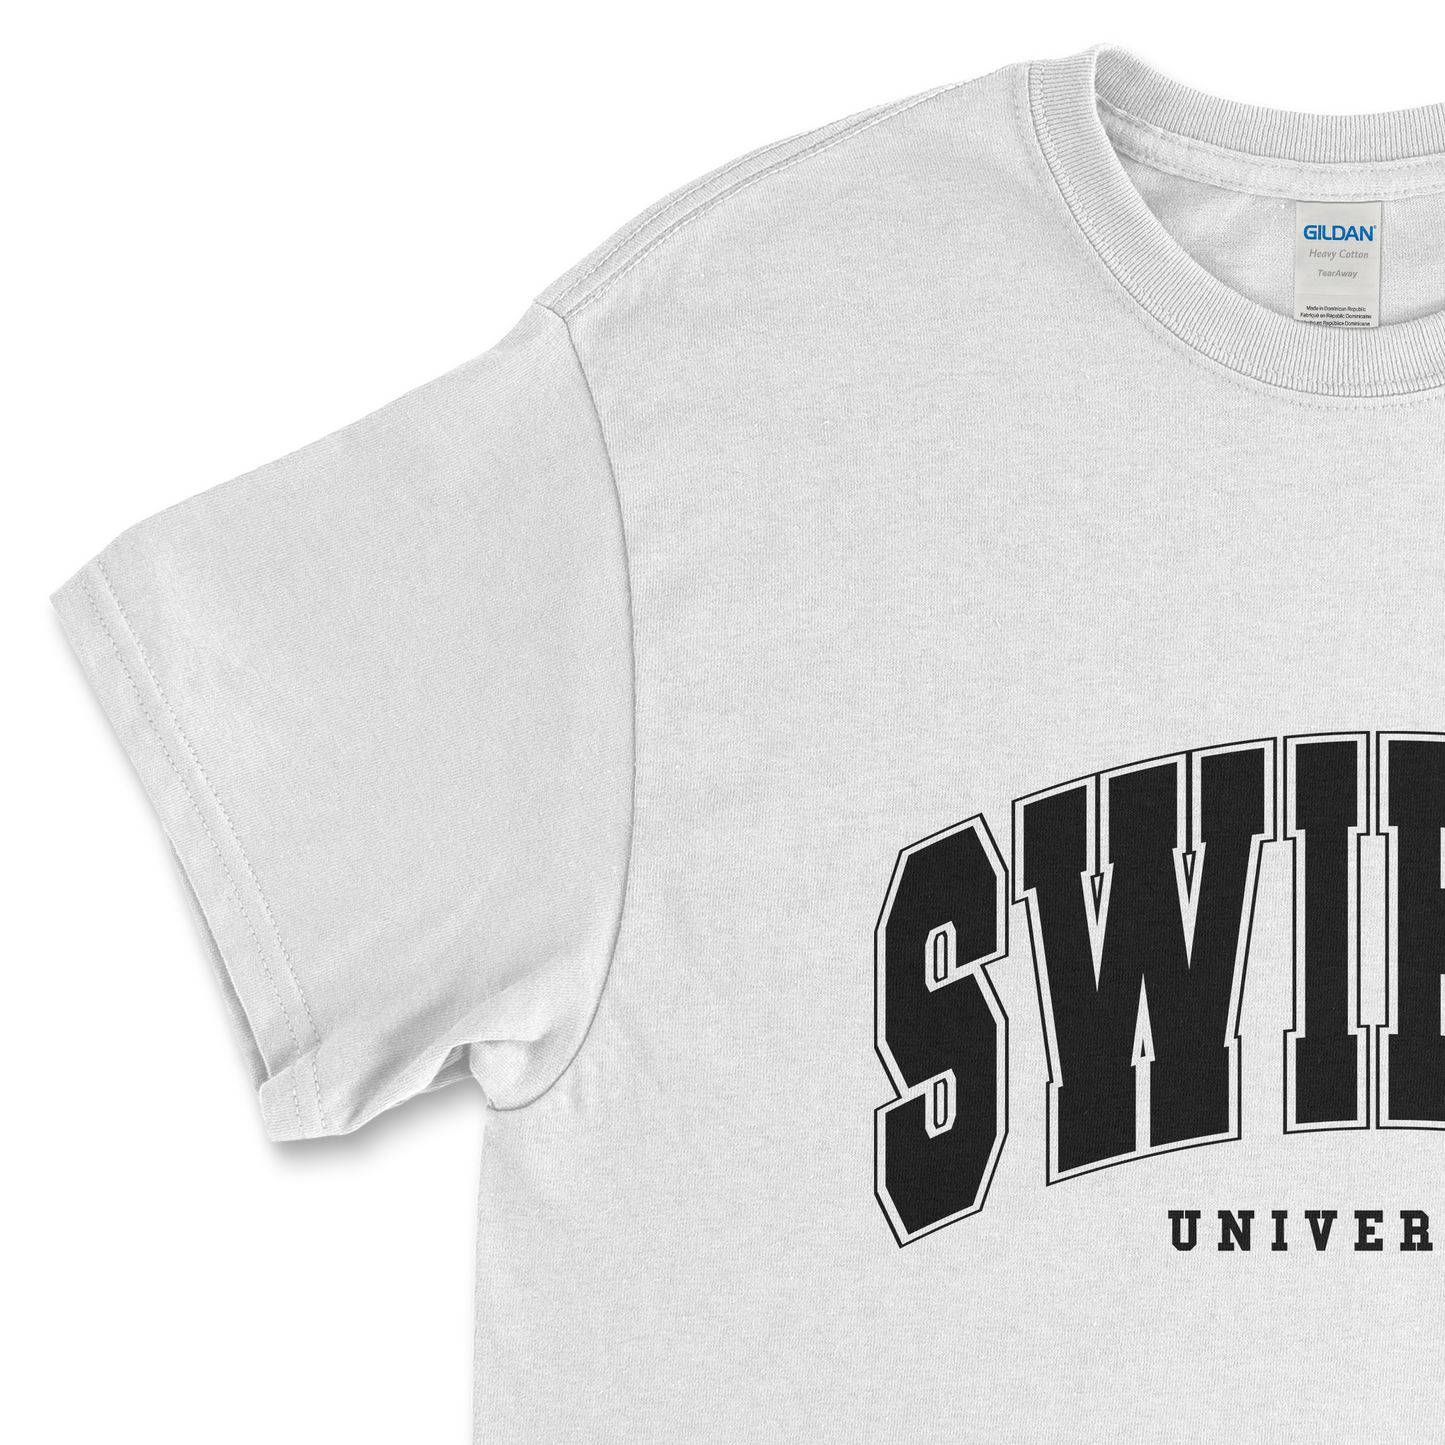 Swiftie University Taylor Swift T-Shirt